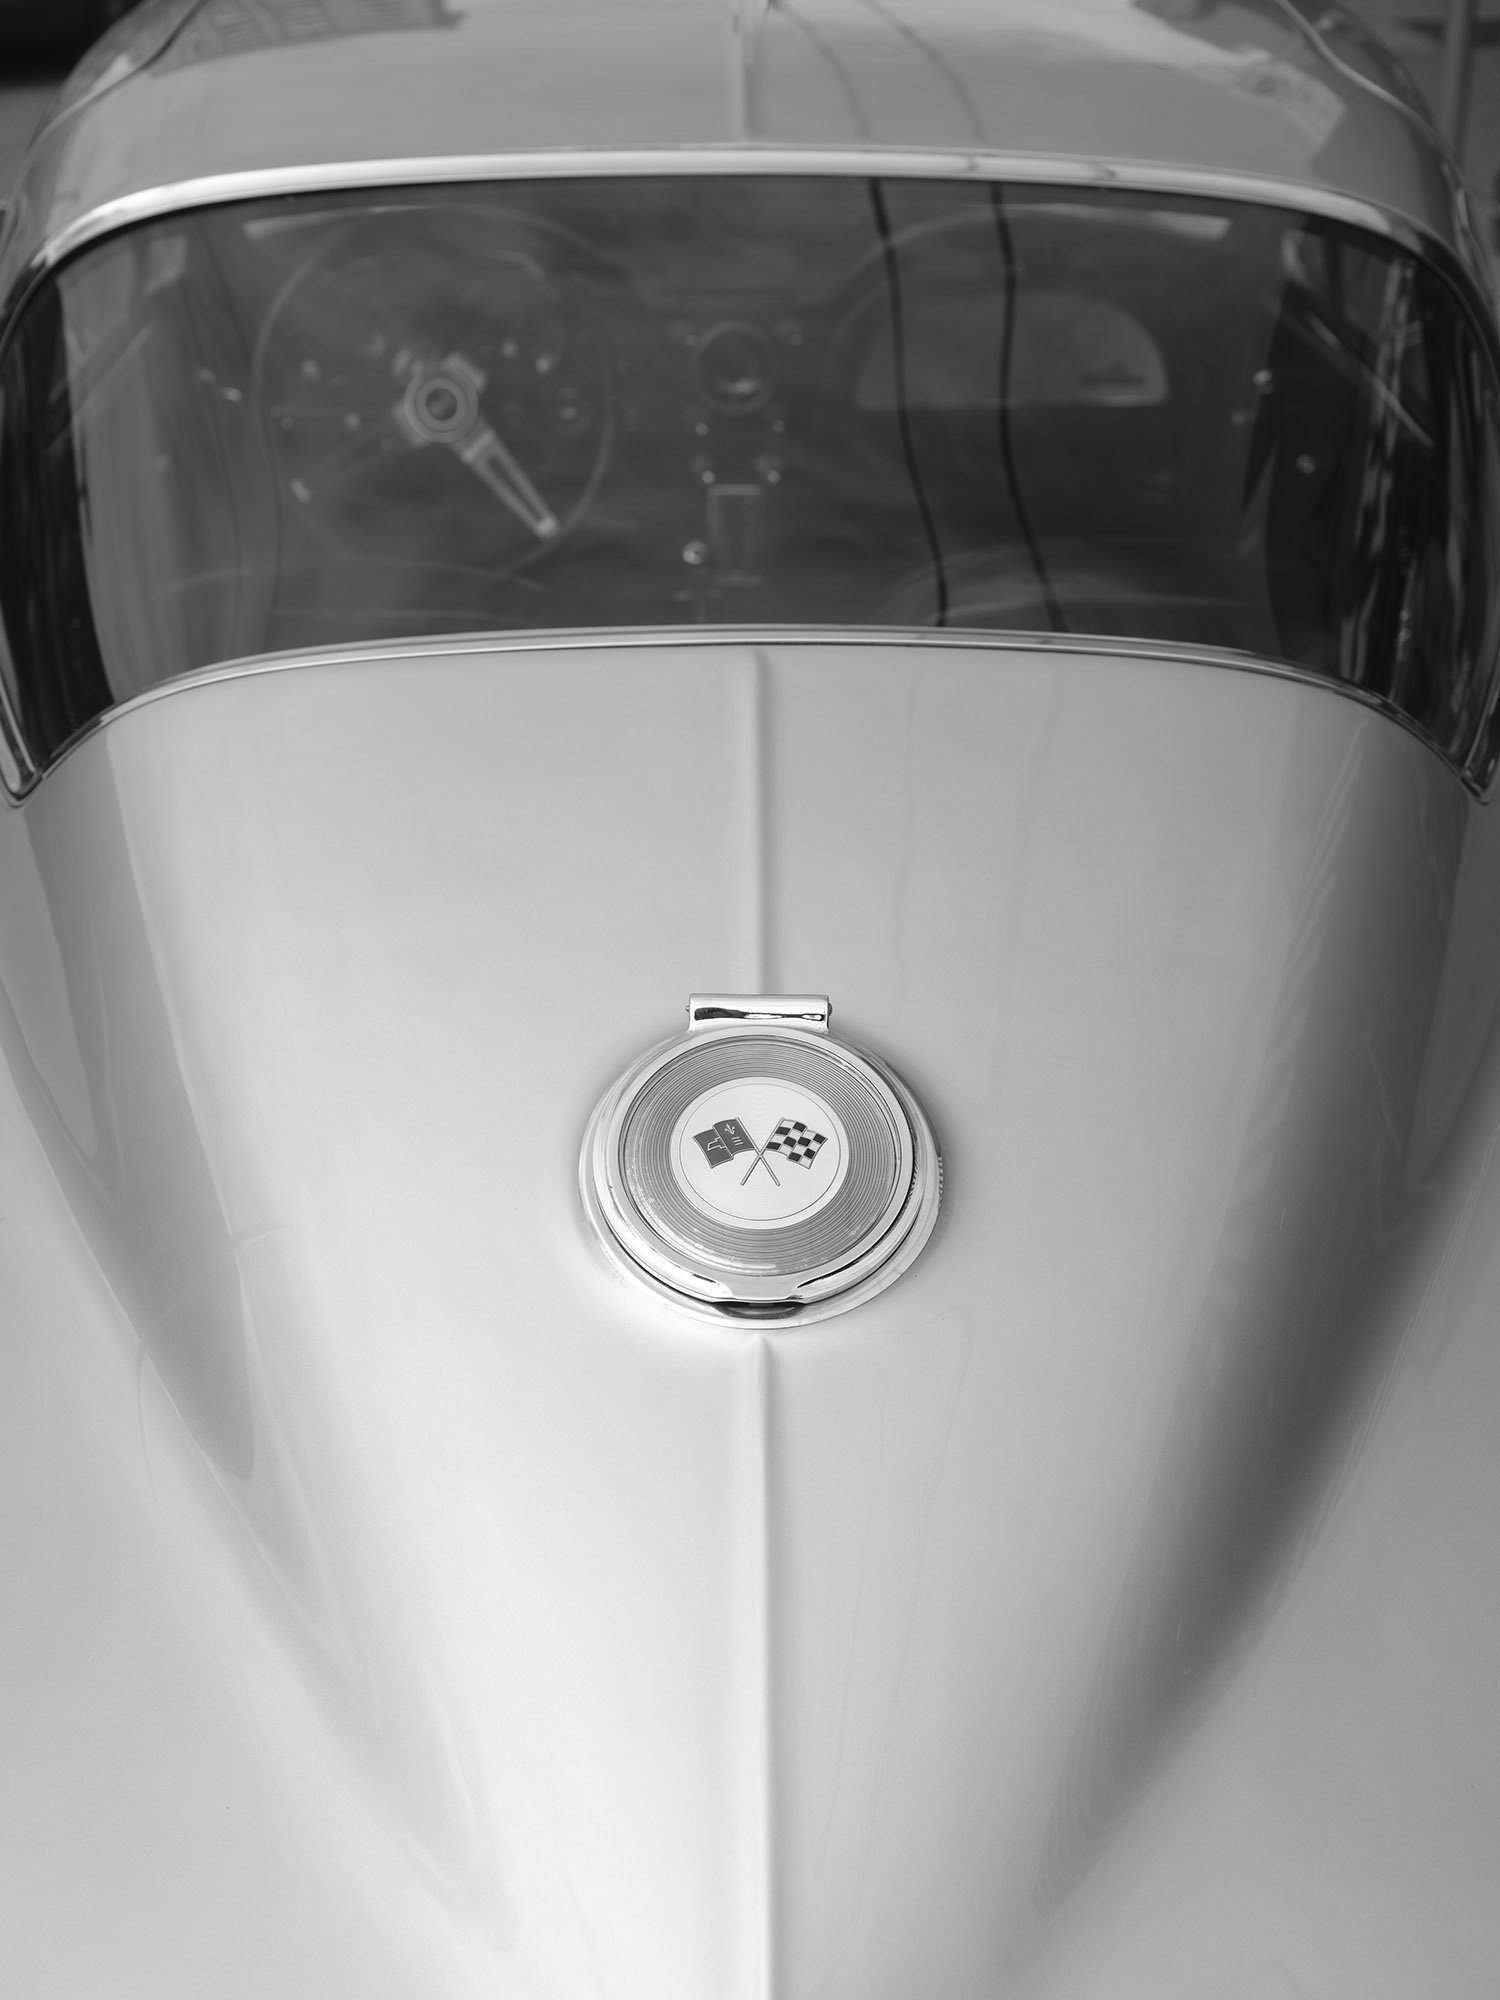 1964 Corvette Stingray